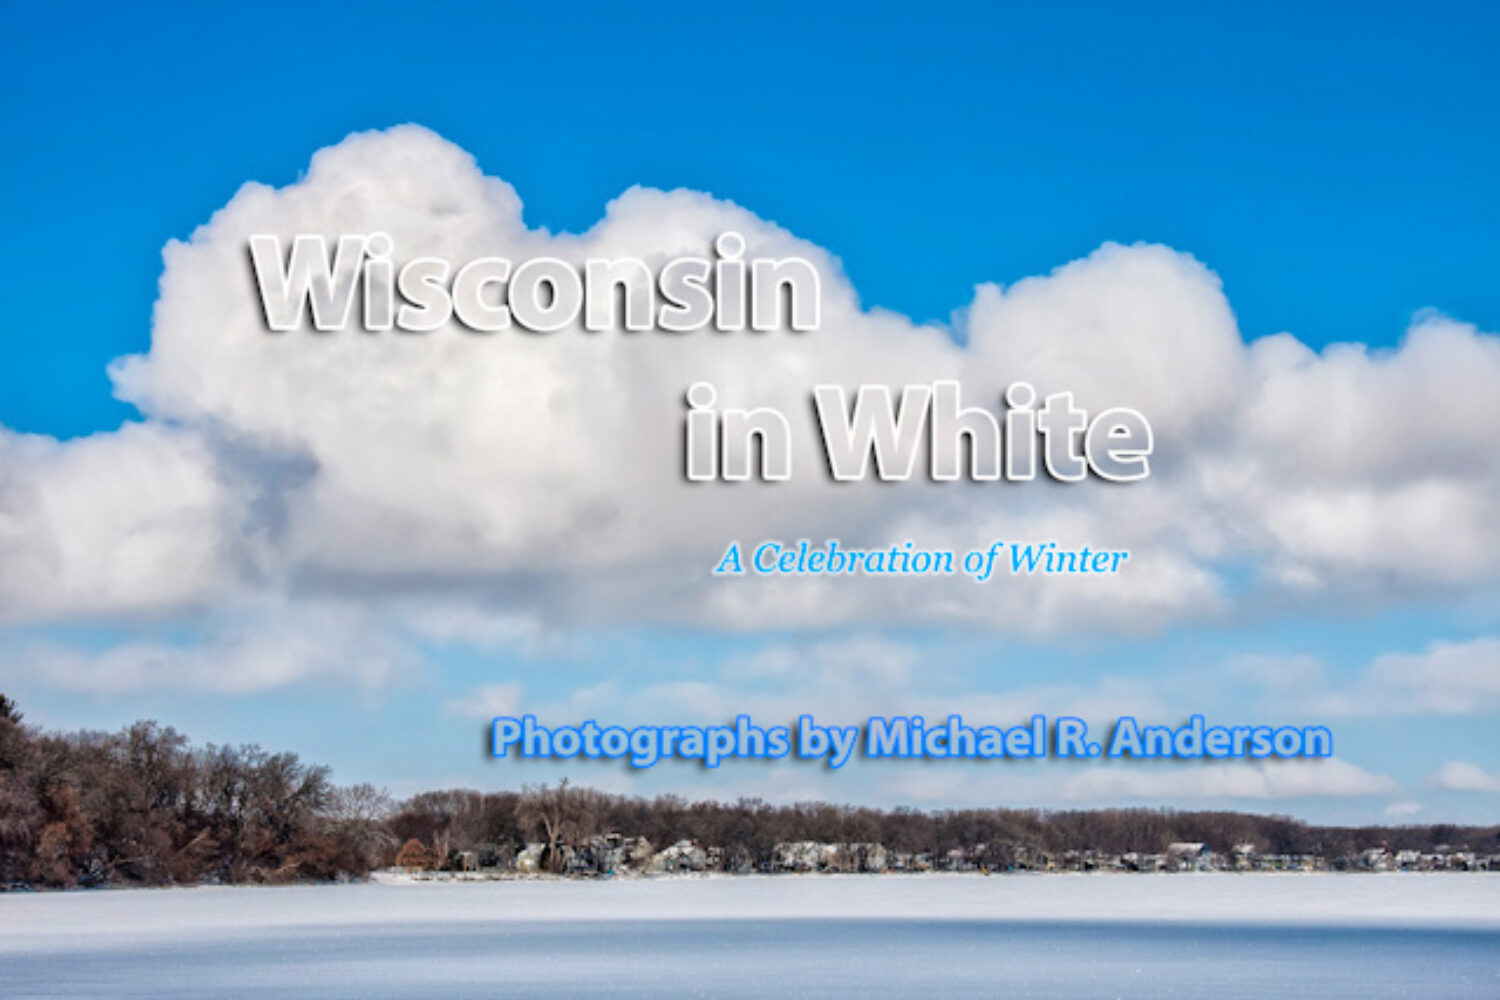 Wisconsin in white